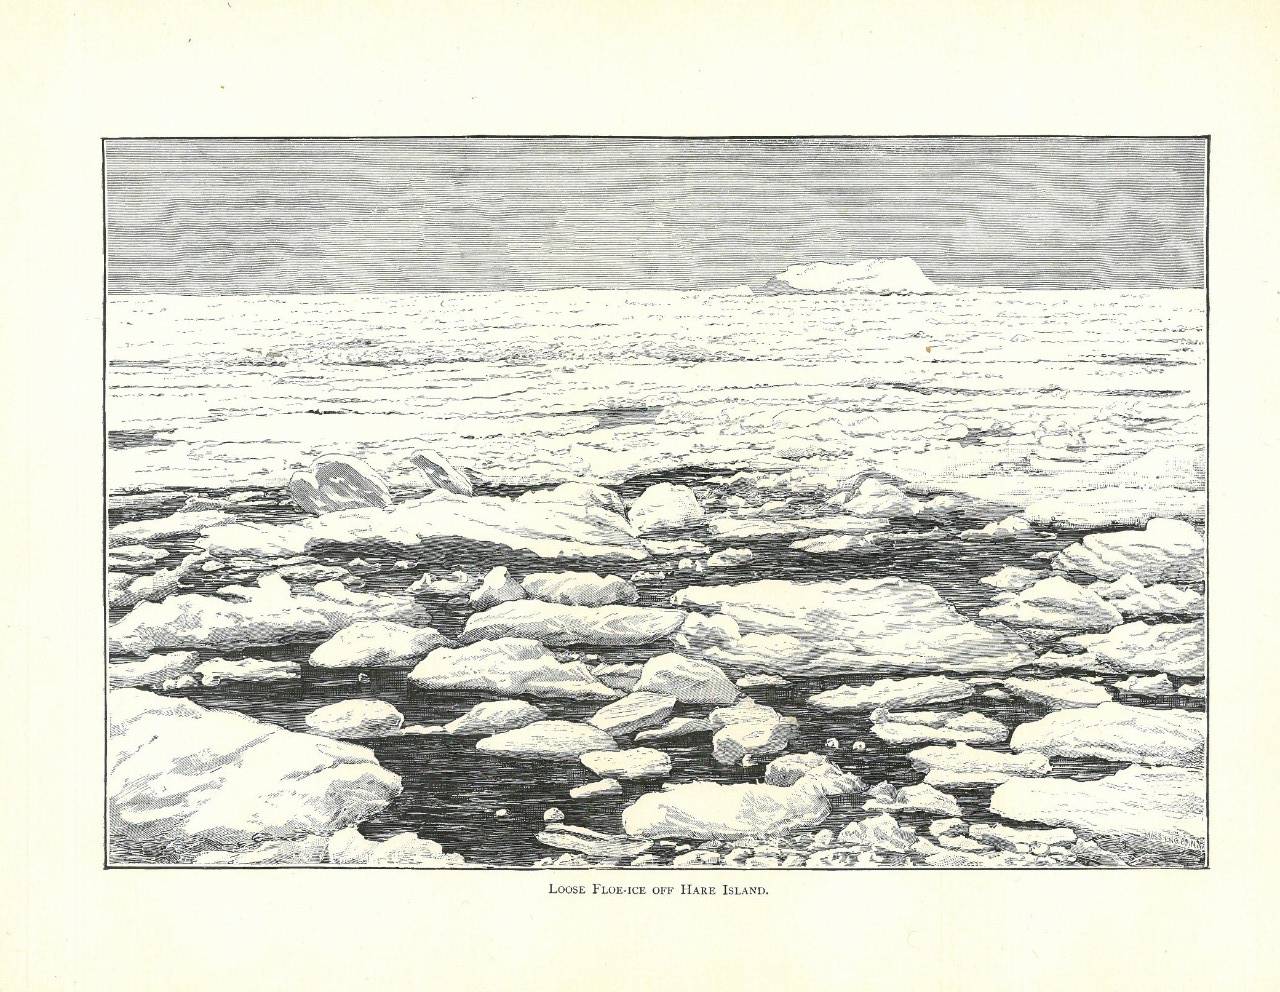 Loose Floe-Ice Off Hare Island.